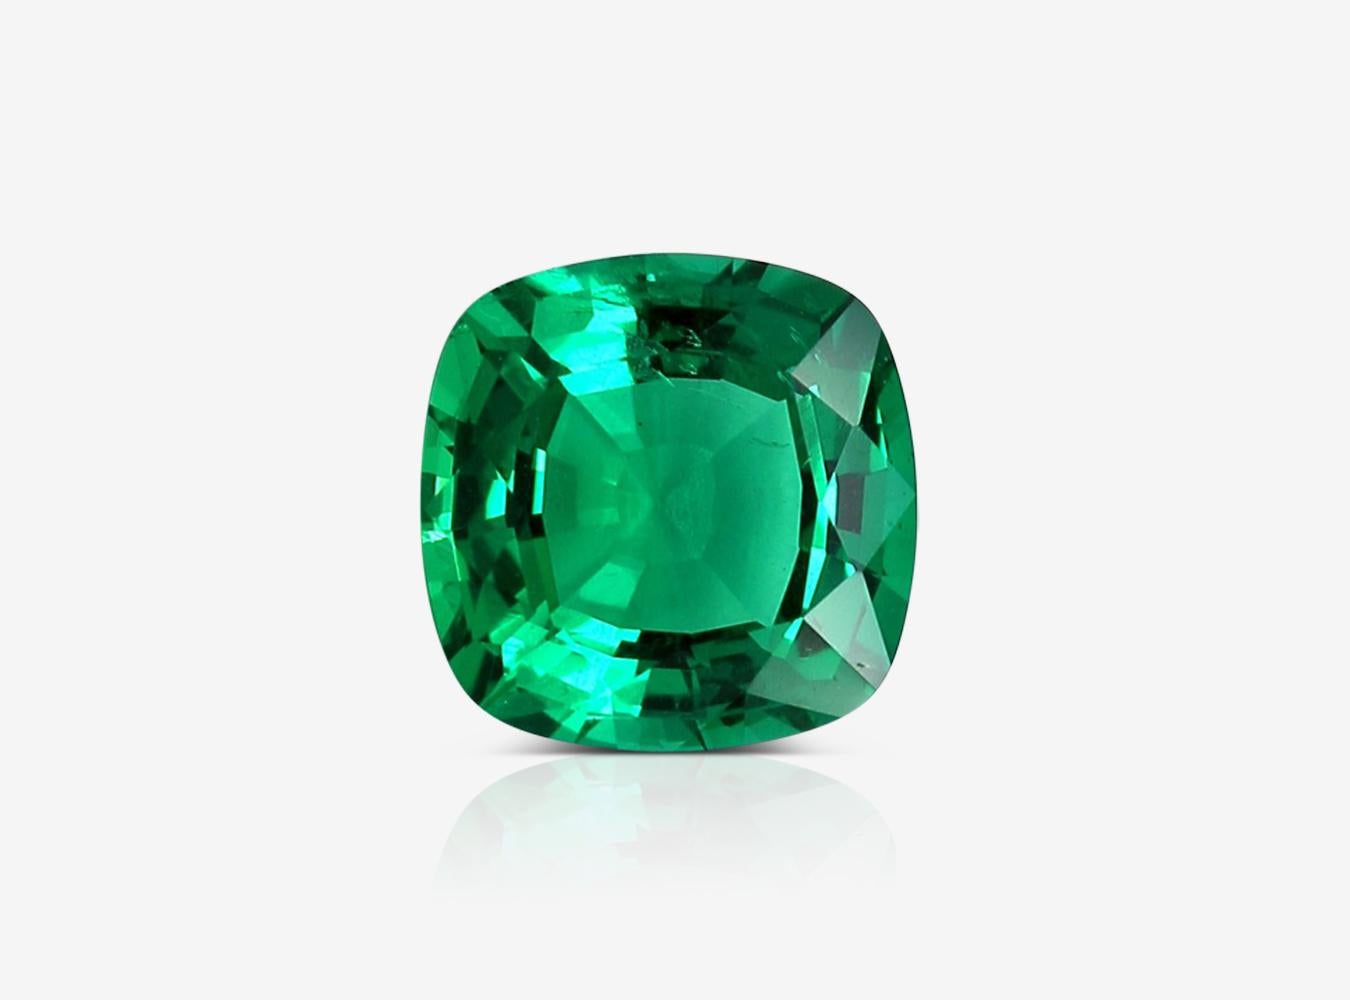 emerald and diamond earrings